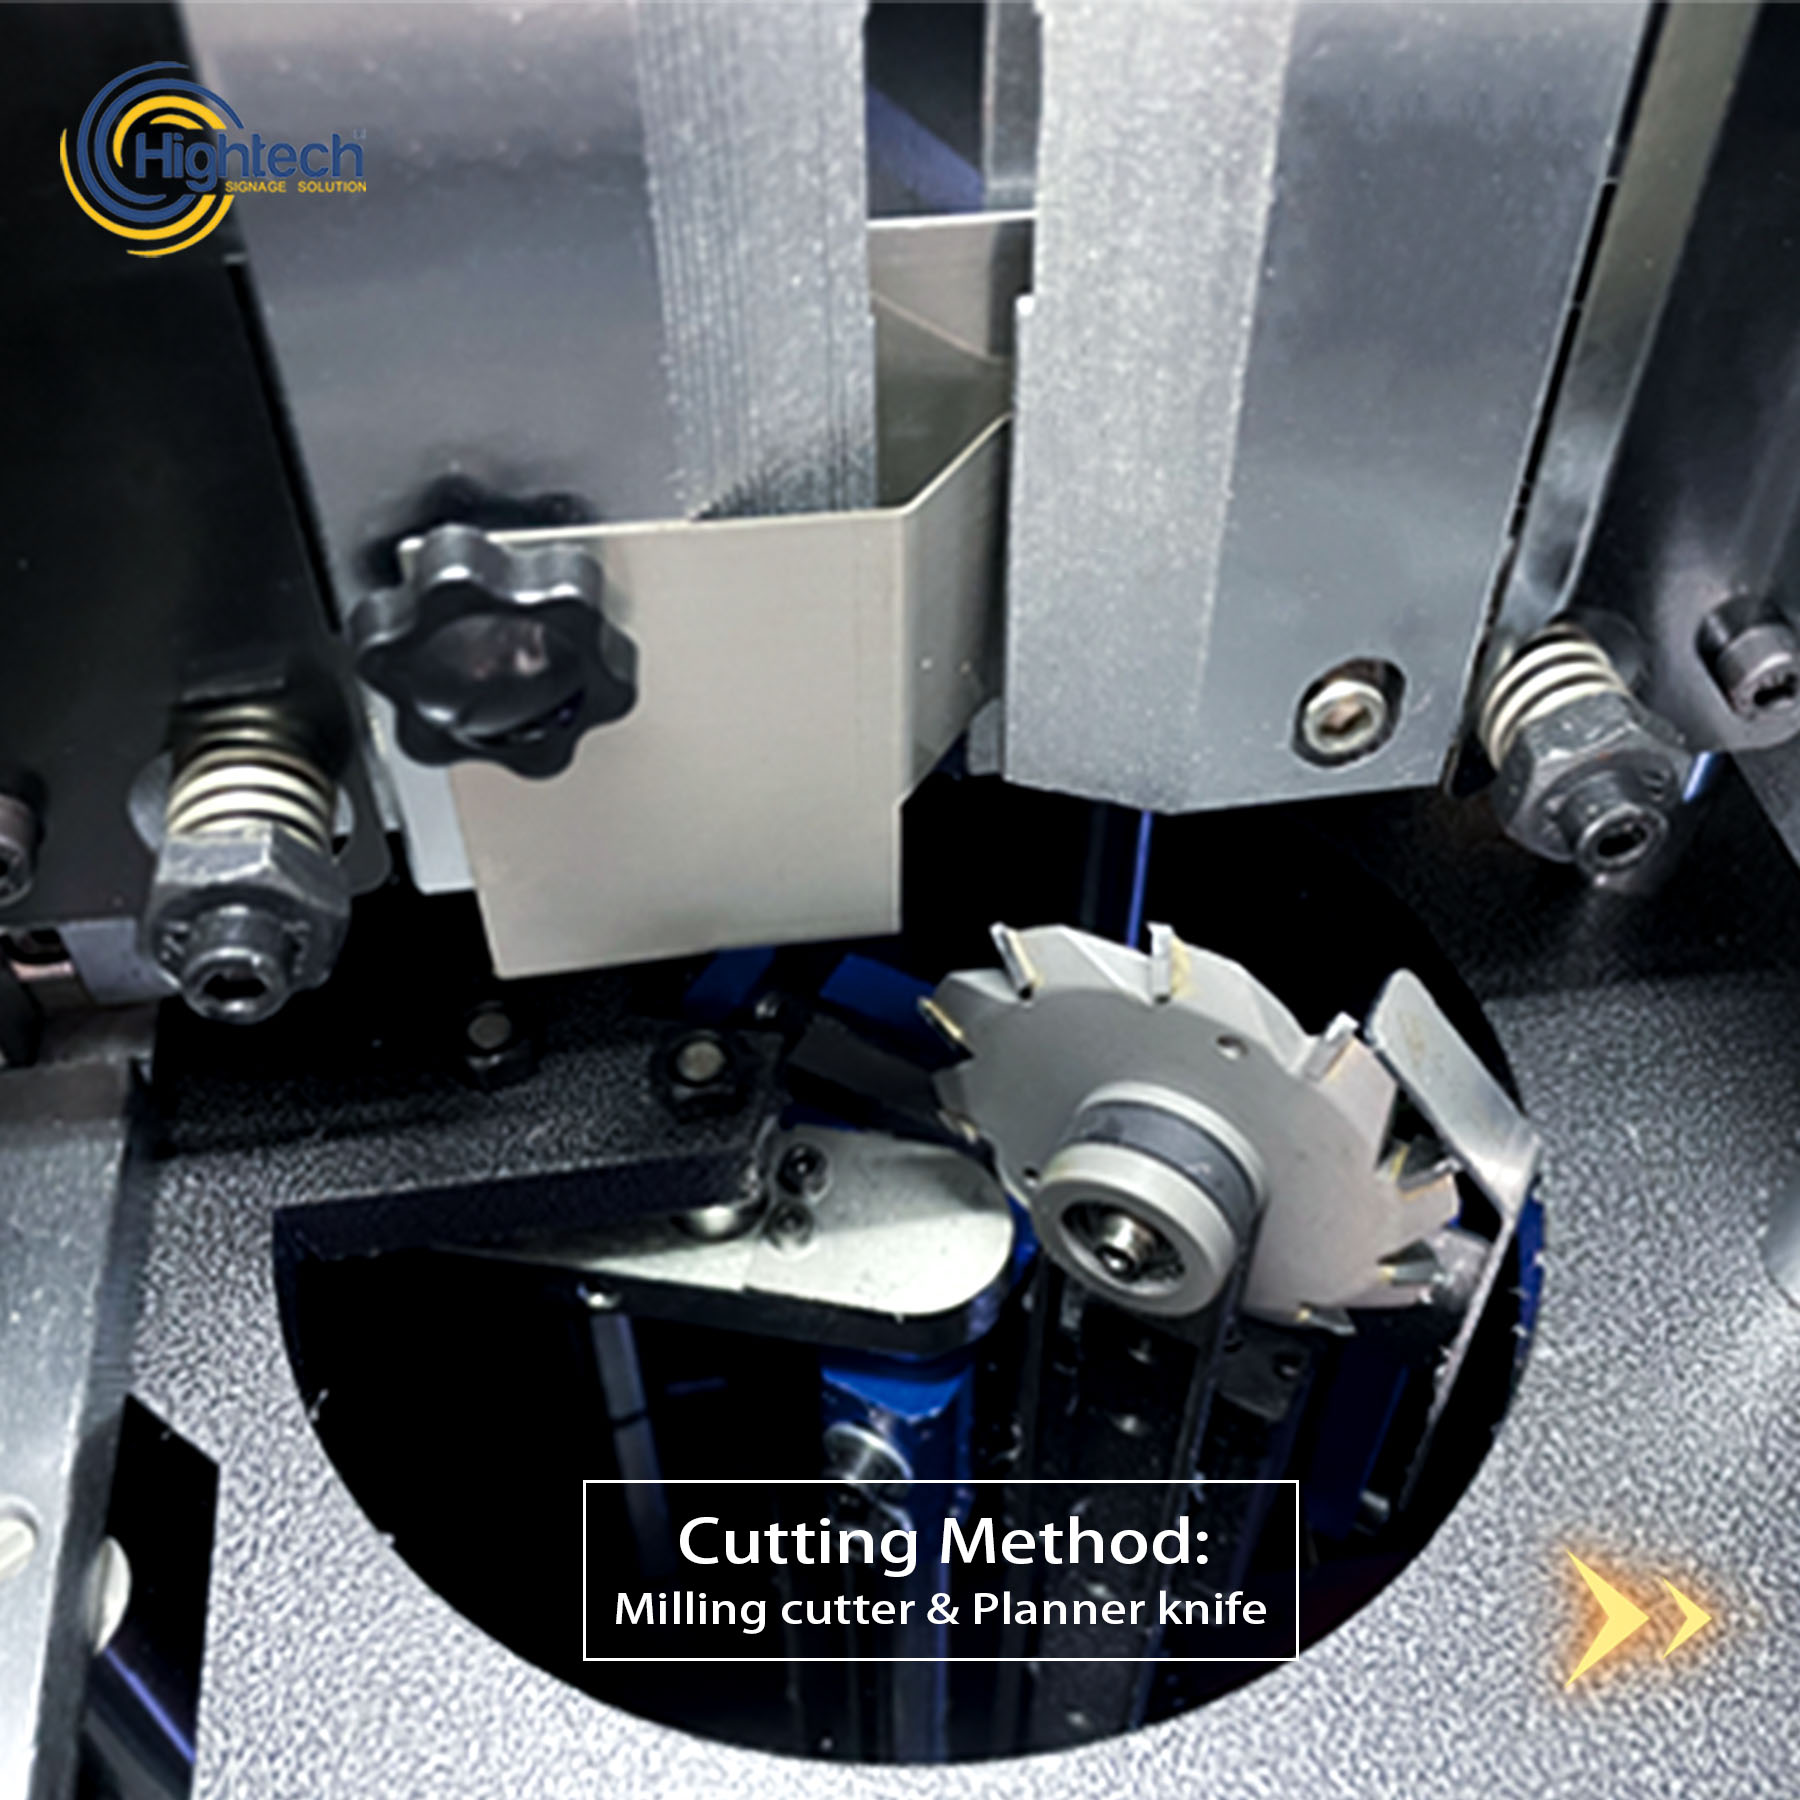 Hightech laser welding machine from China manufacturer